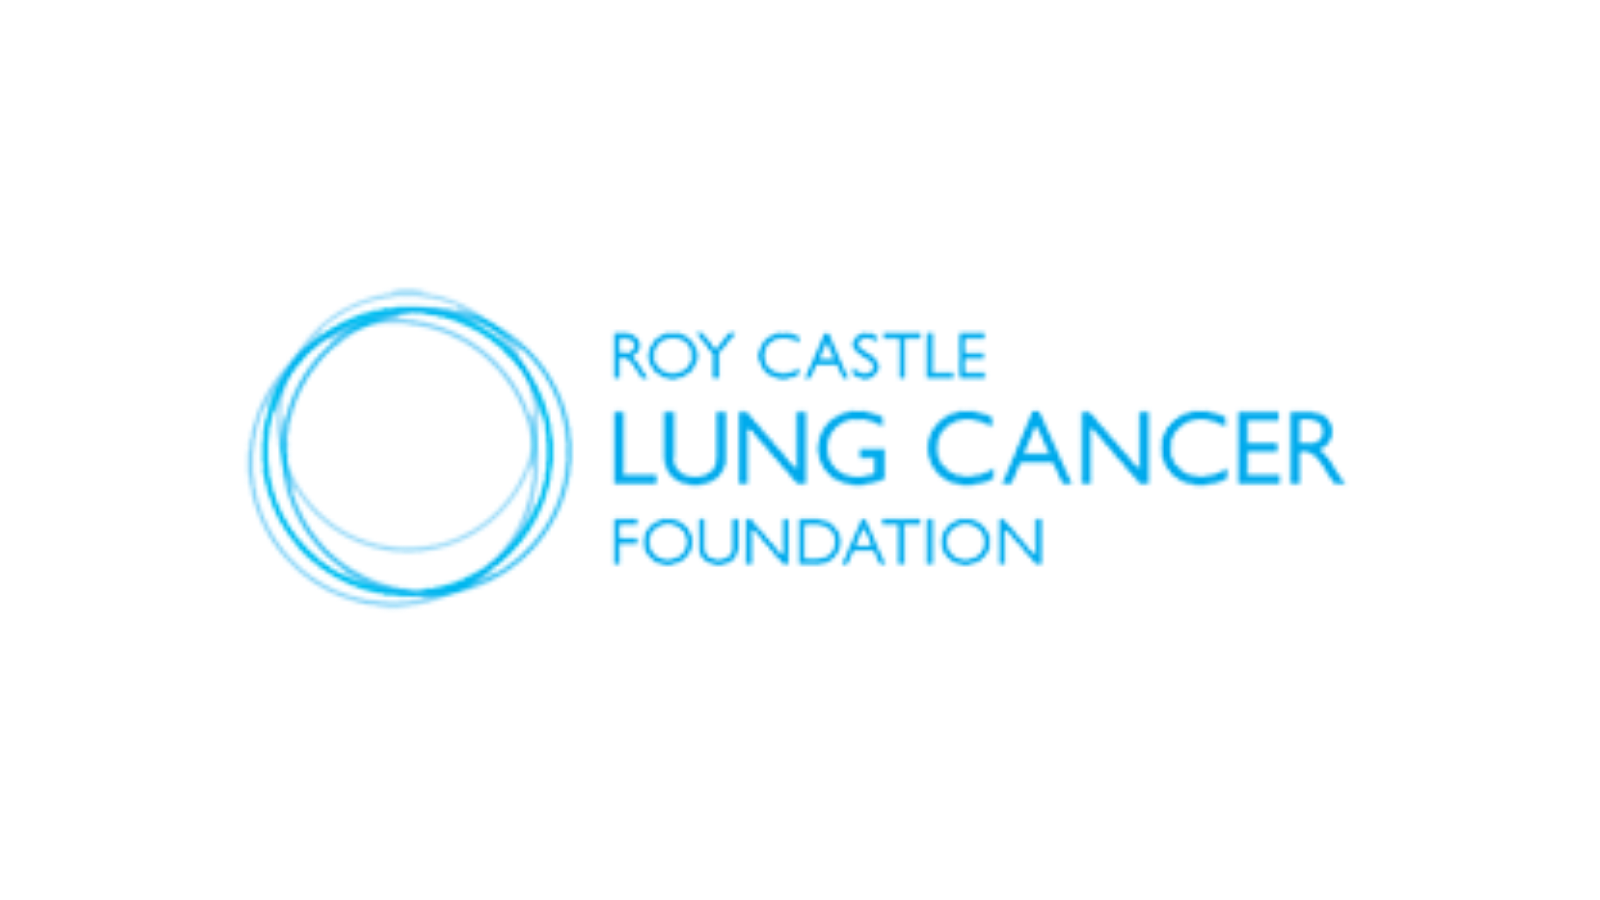 Roy Castle lung cancer logo.